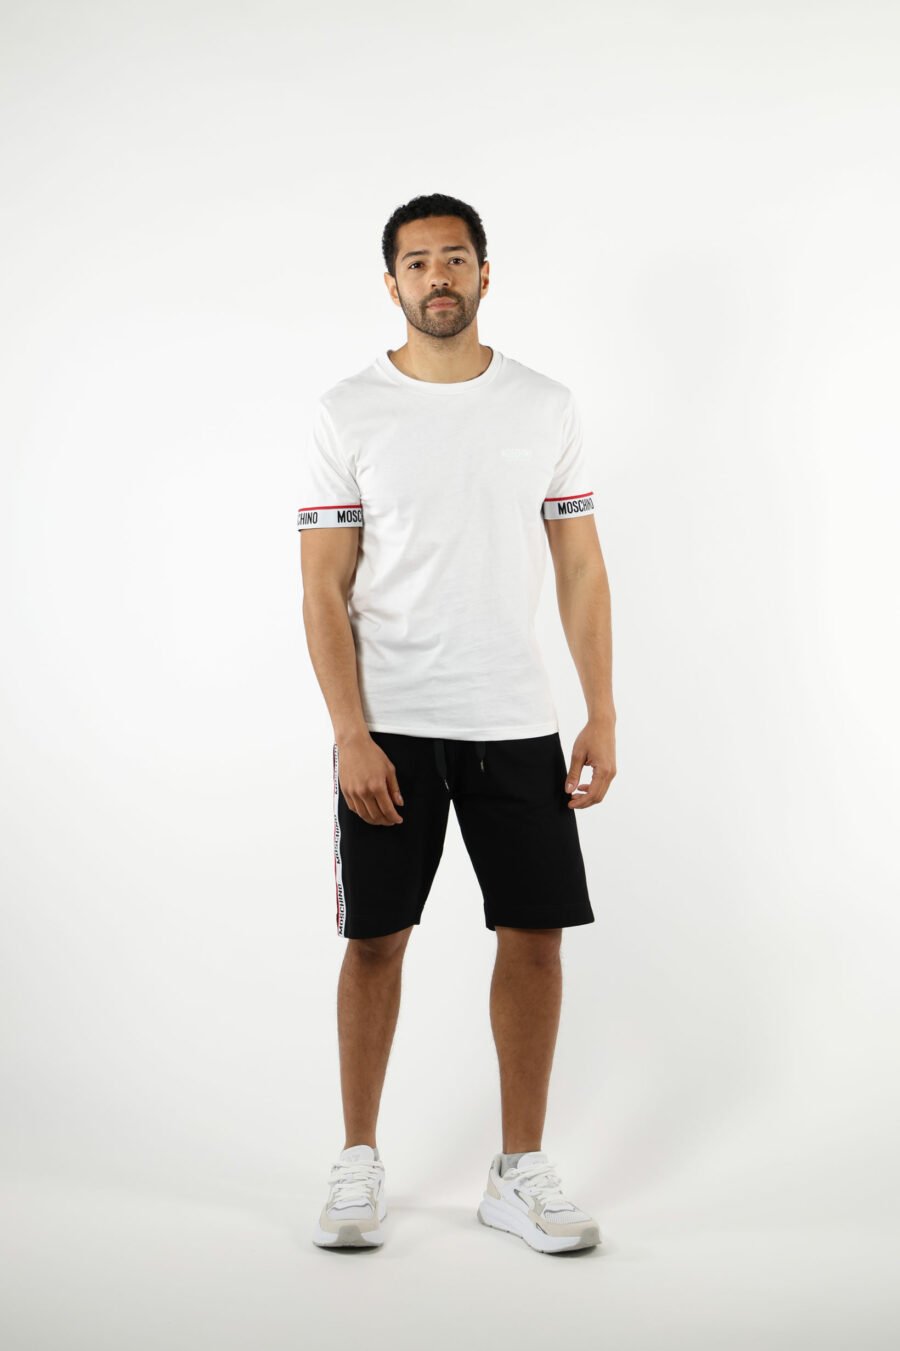 Camiseta blanca con logo blanco en mangas - 110971